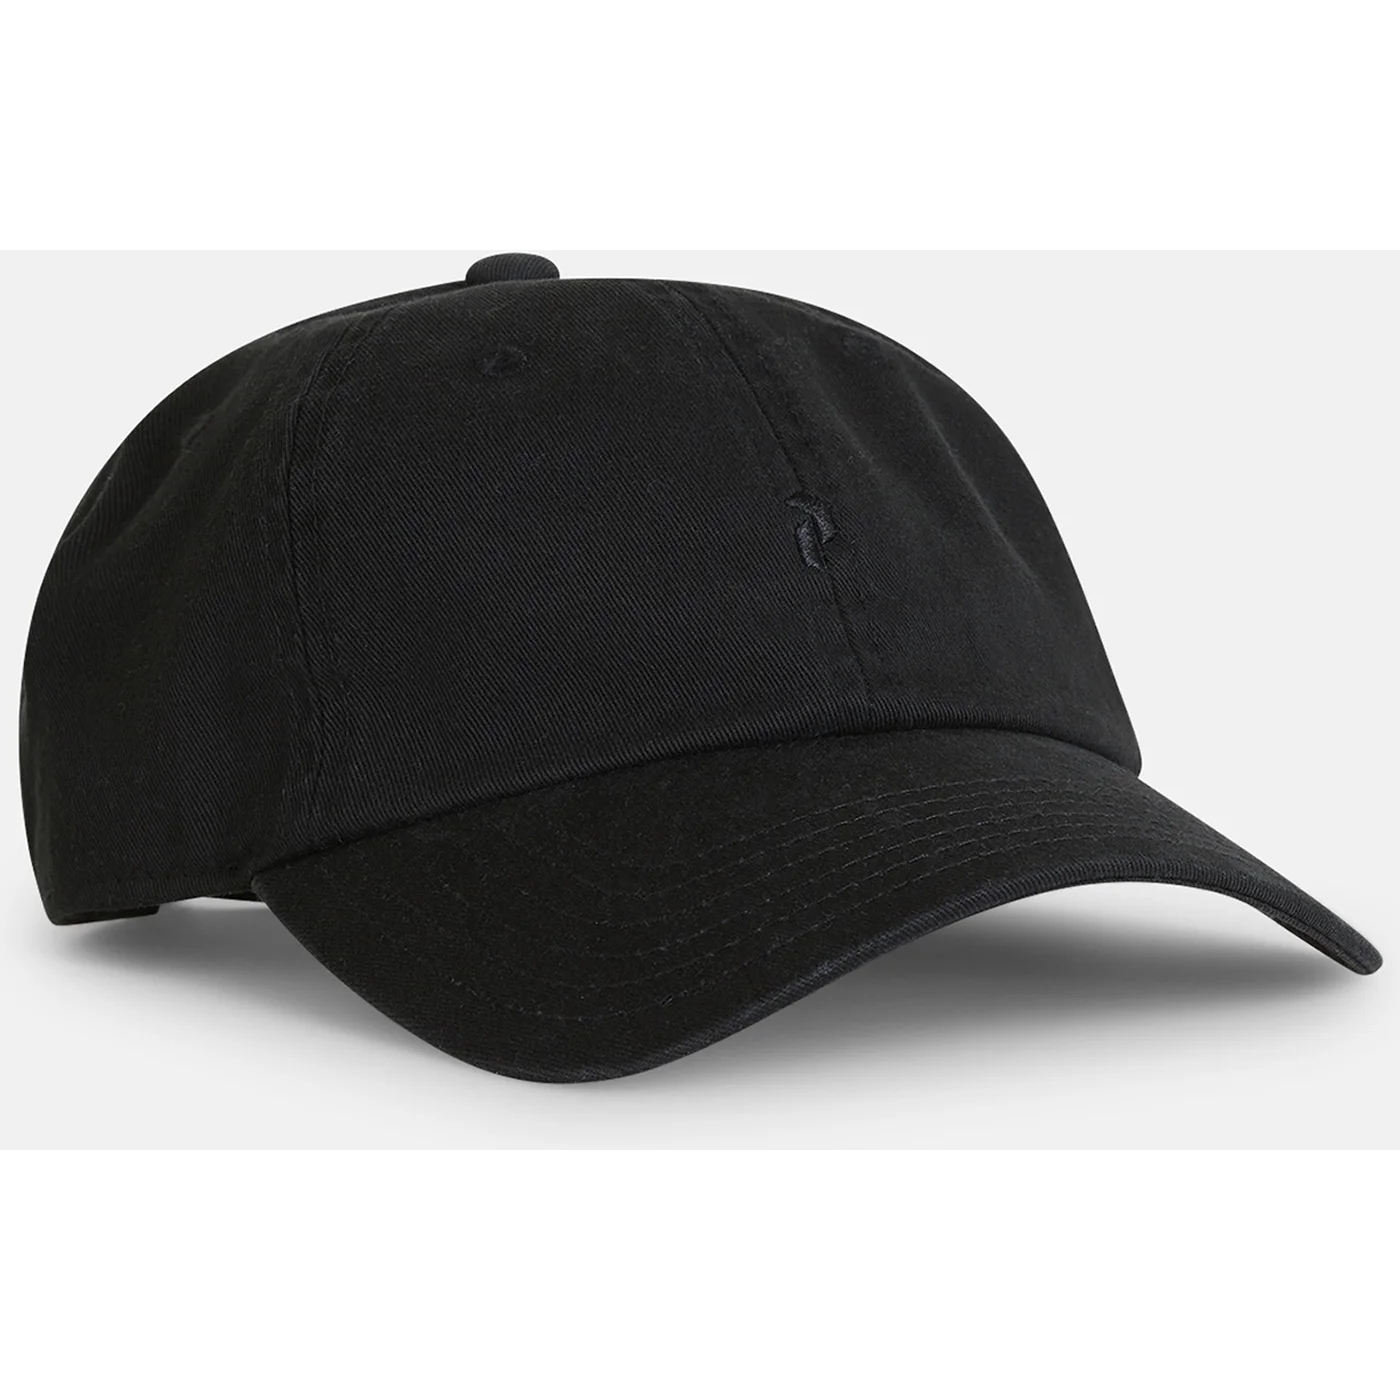 PEAK PERFORMANCE HERREN GROUND CAP-BLACK Black 0xyaByKn